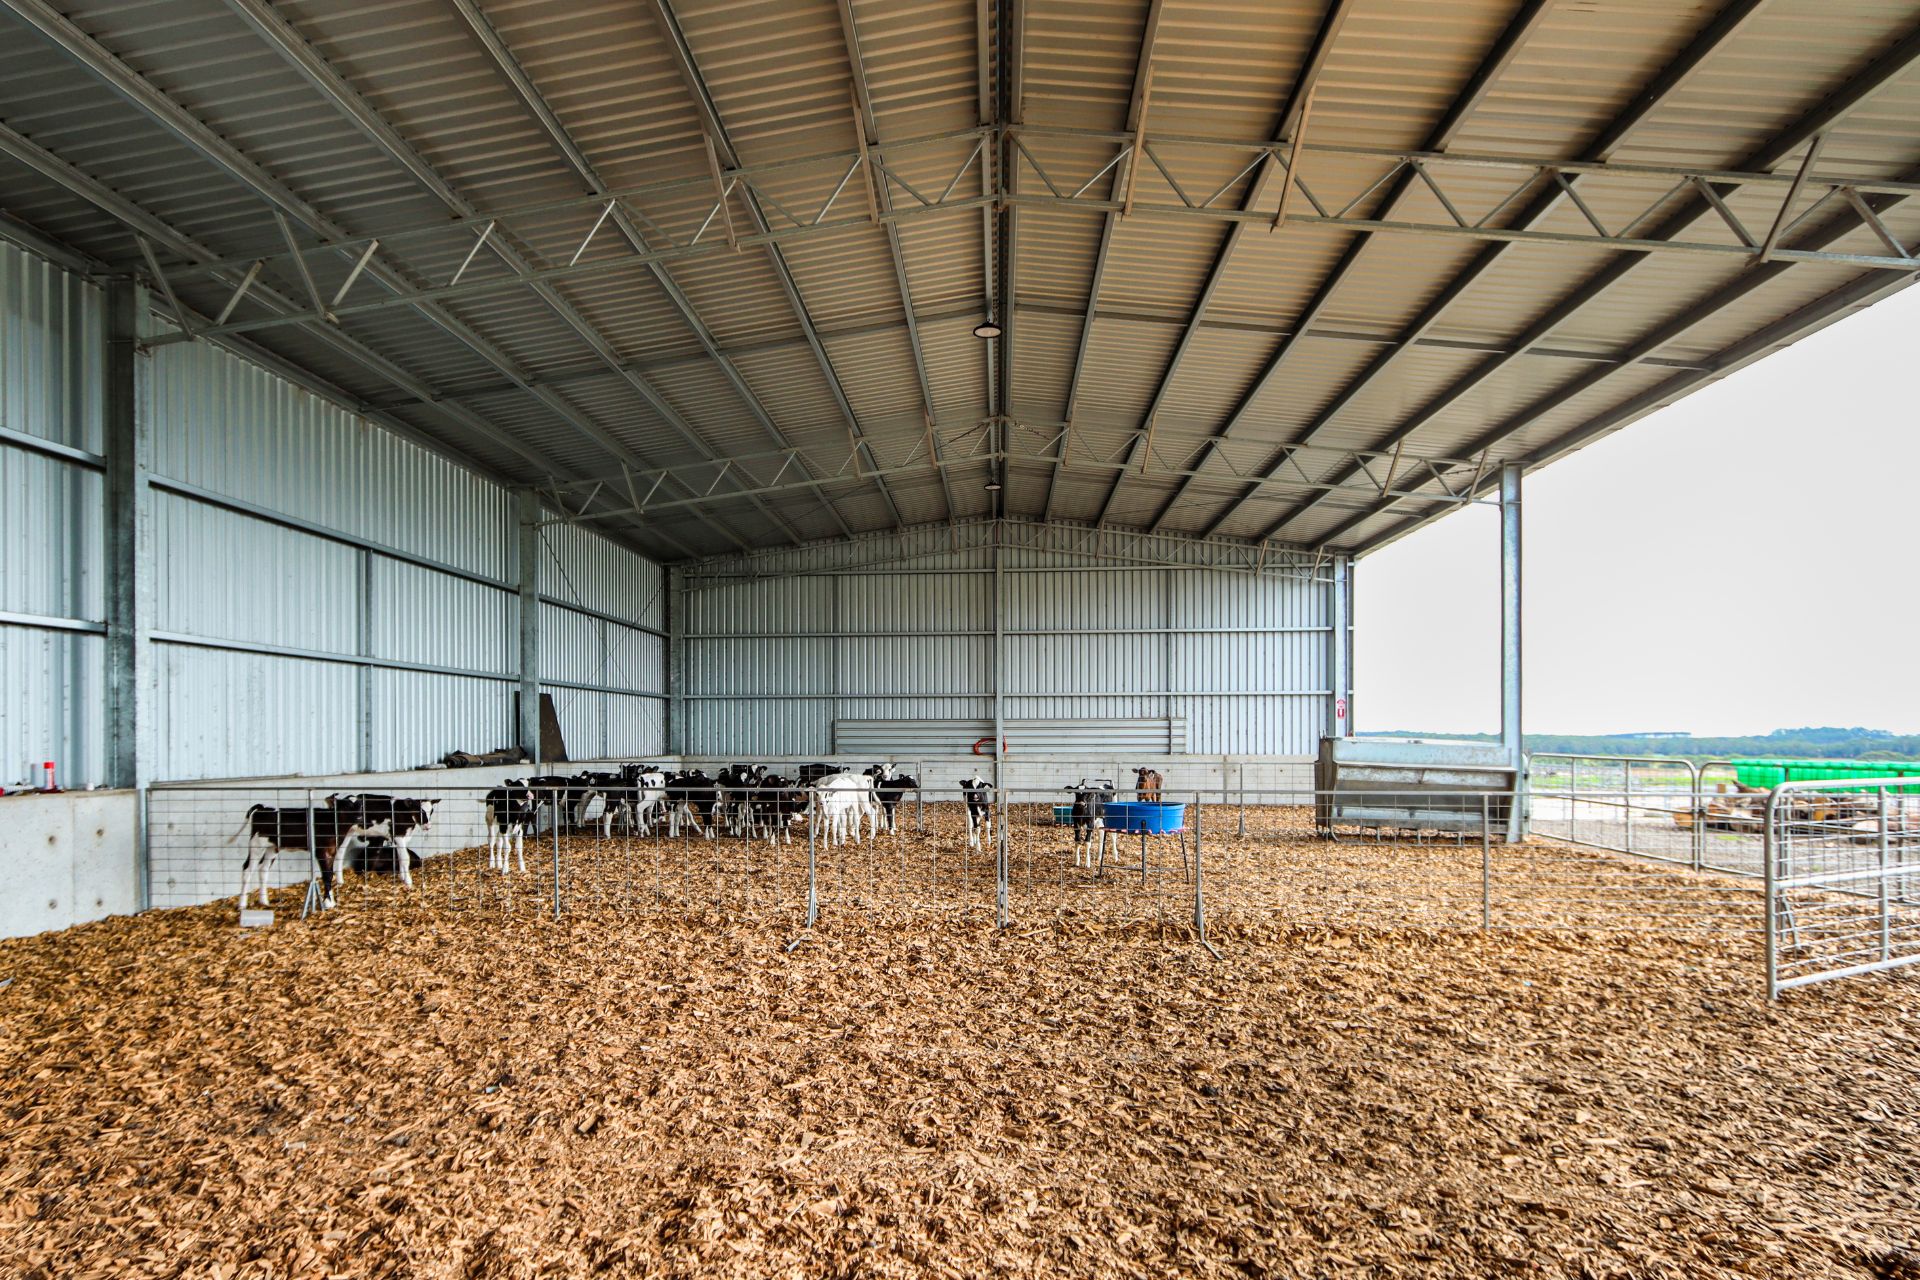 A 64m x 15m x 5.5m calf shed at Irrewillipie - Internal